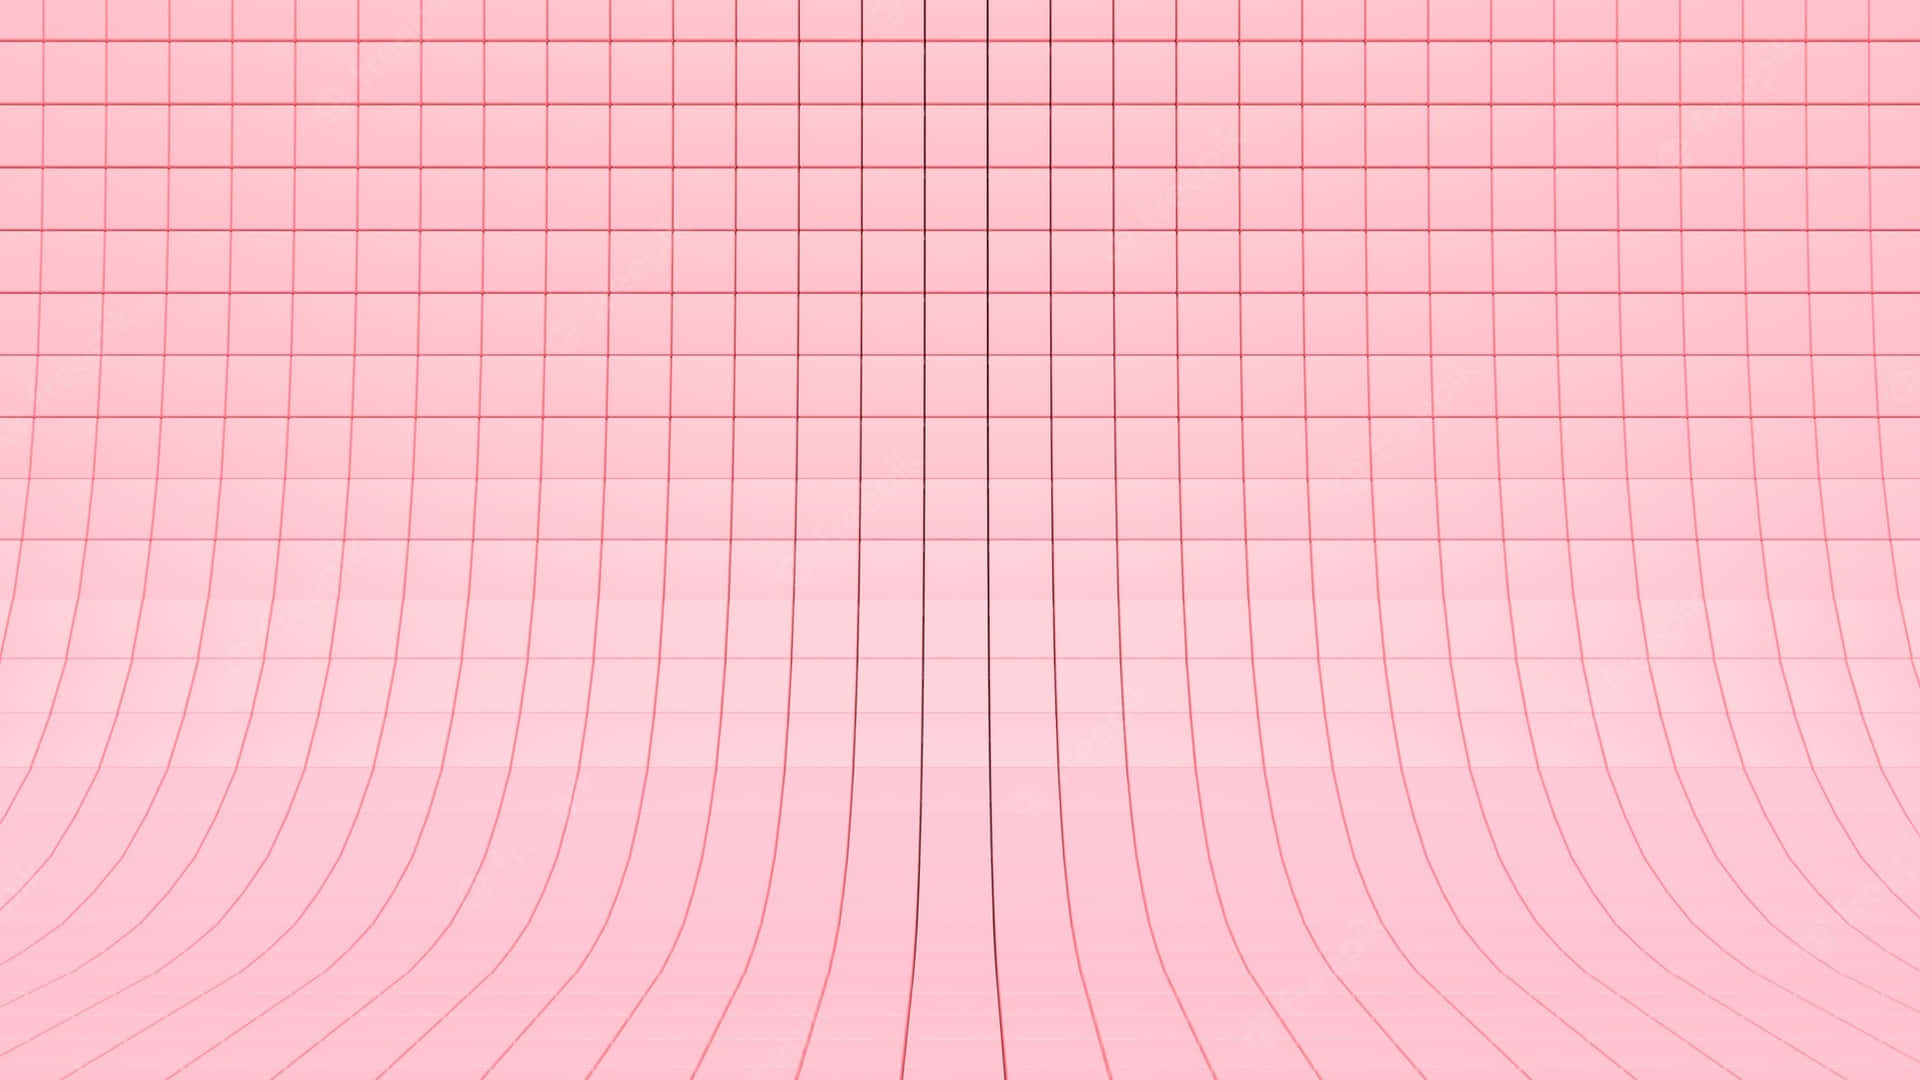 Textureines Modernen Hintergrunds Mit Pinkem Gitter Wallpaper